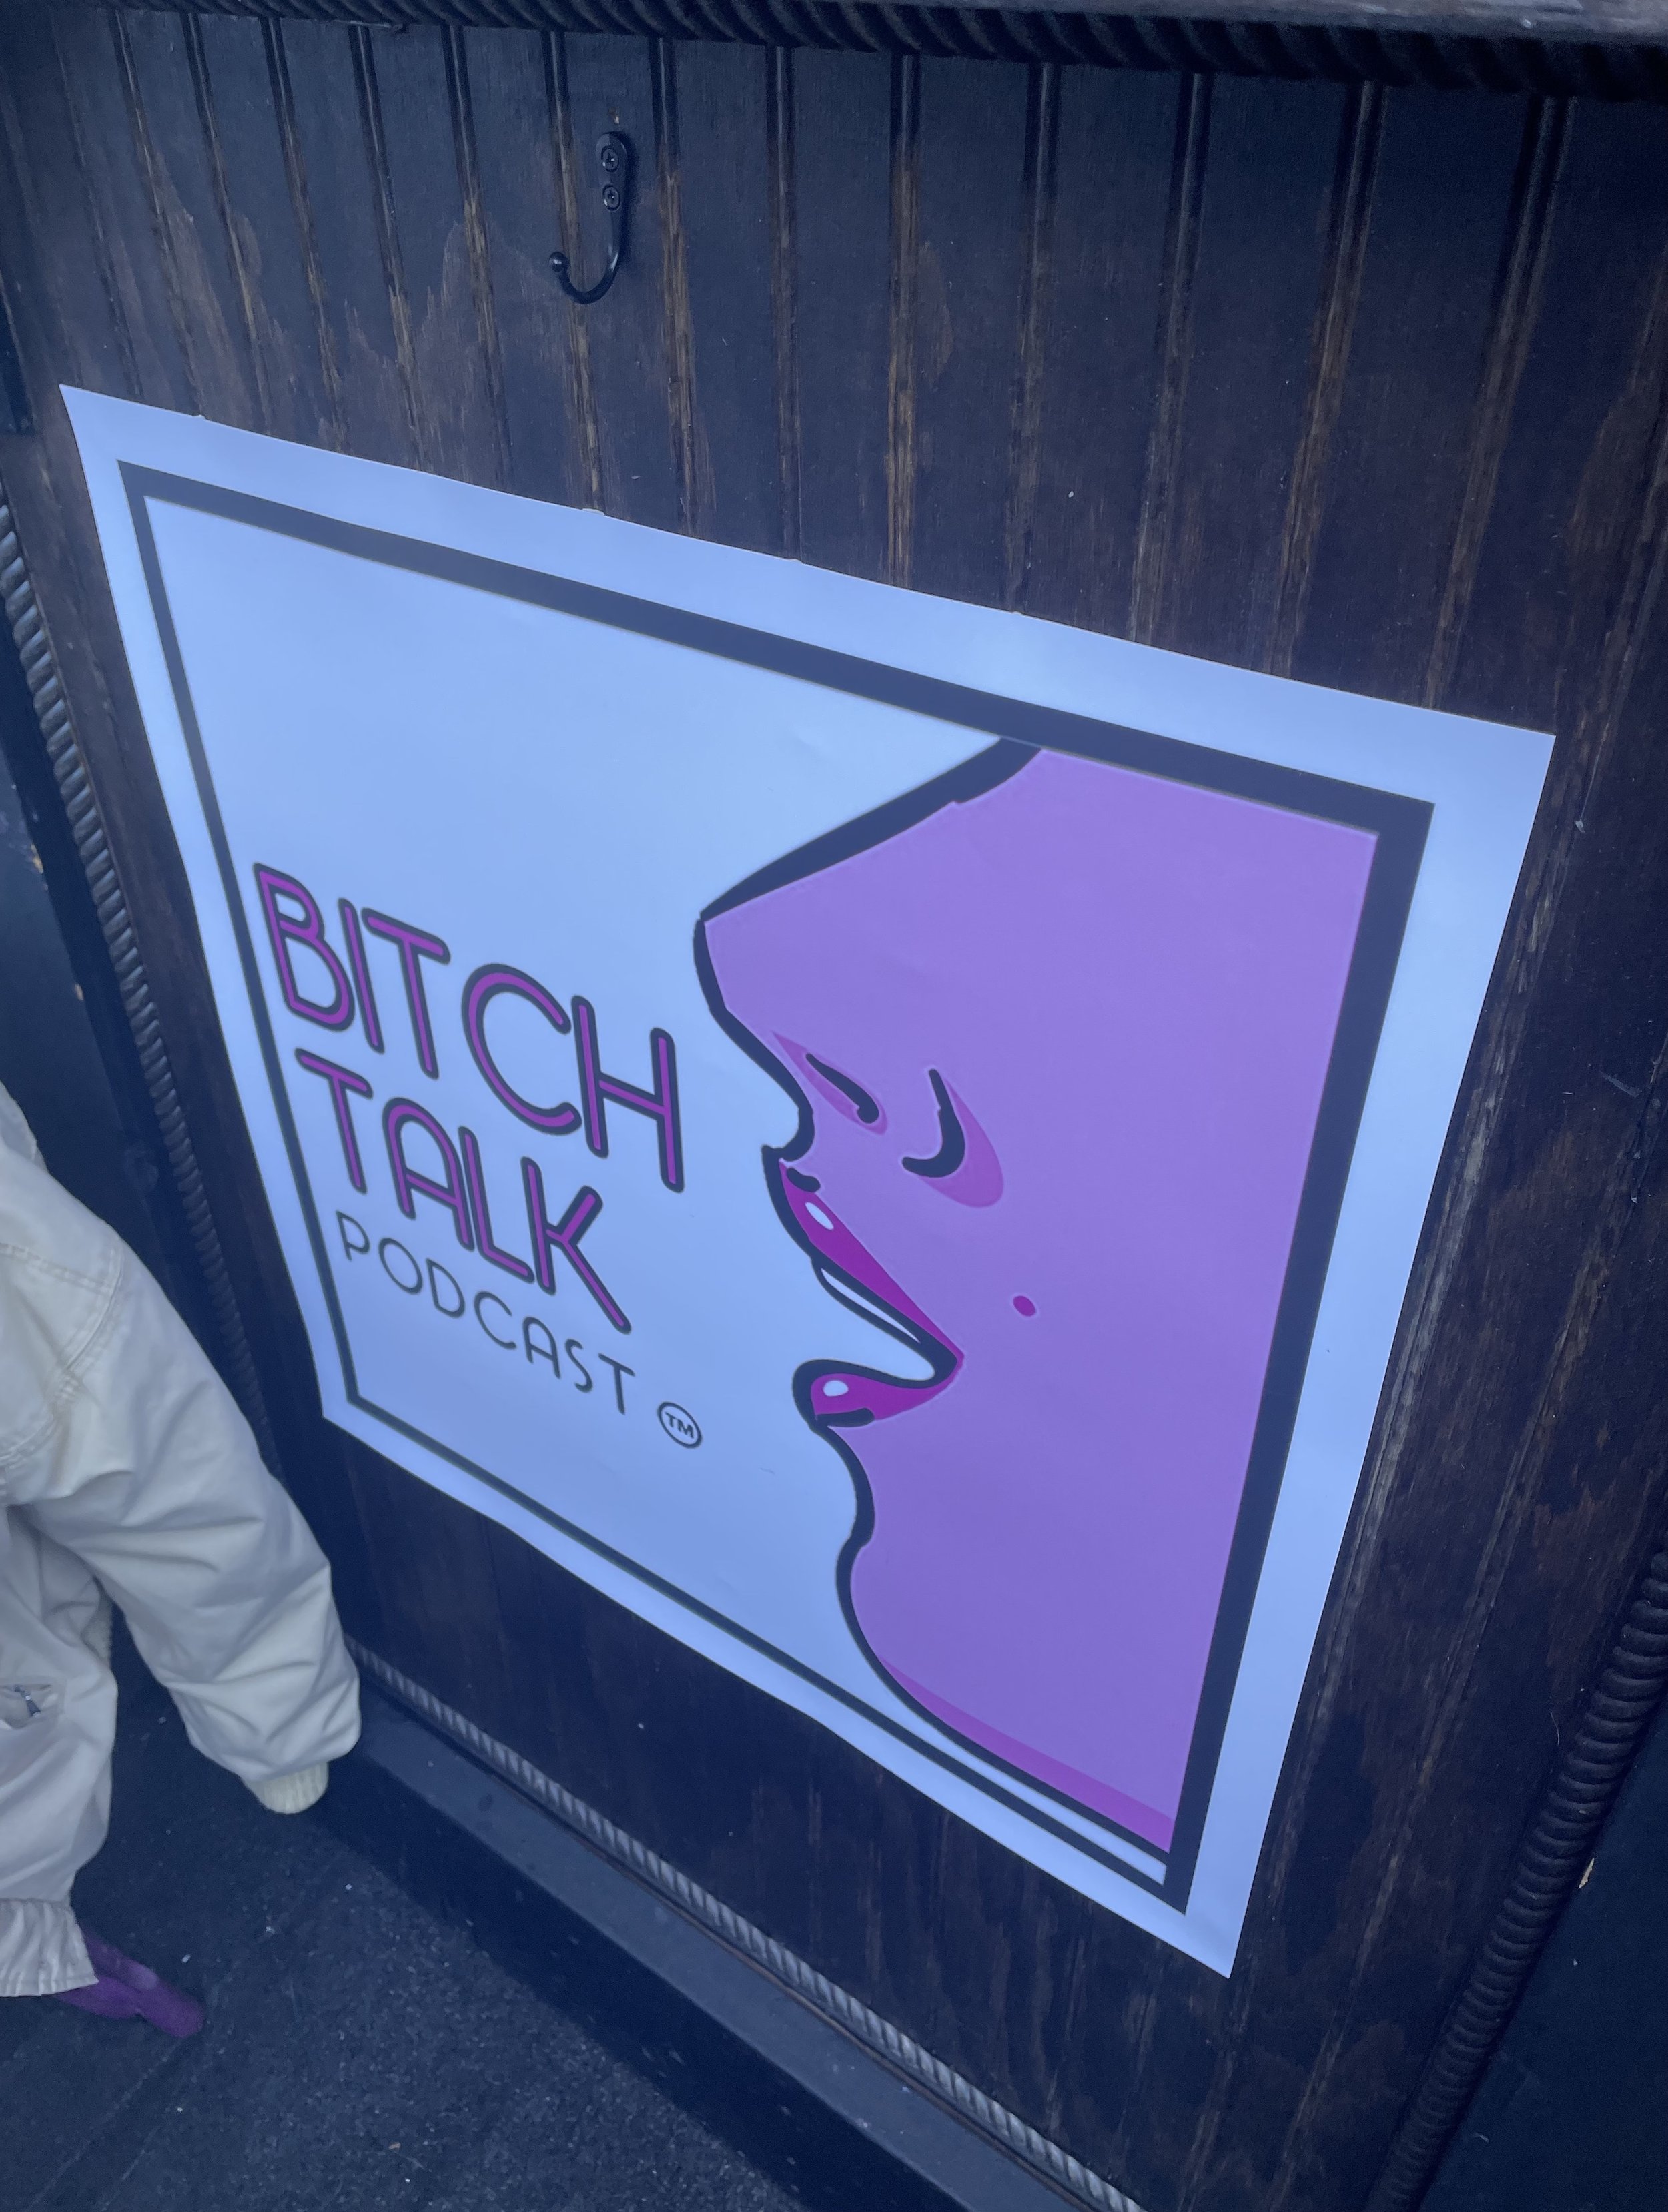 bitch poster.jpg